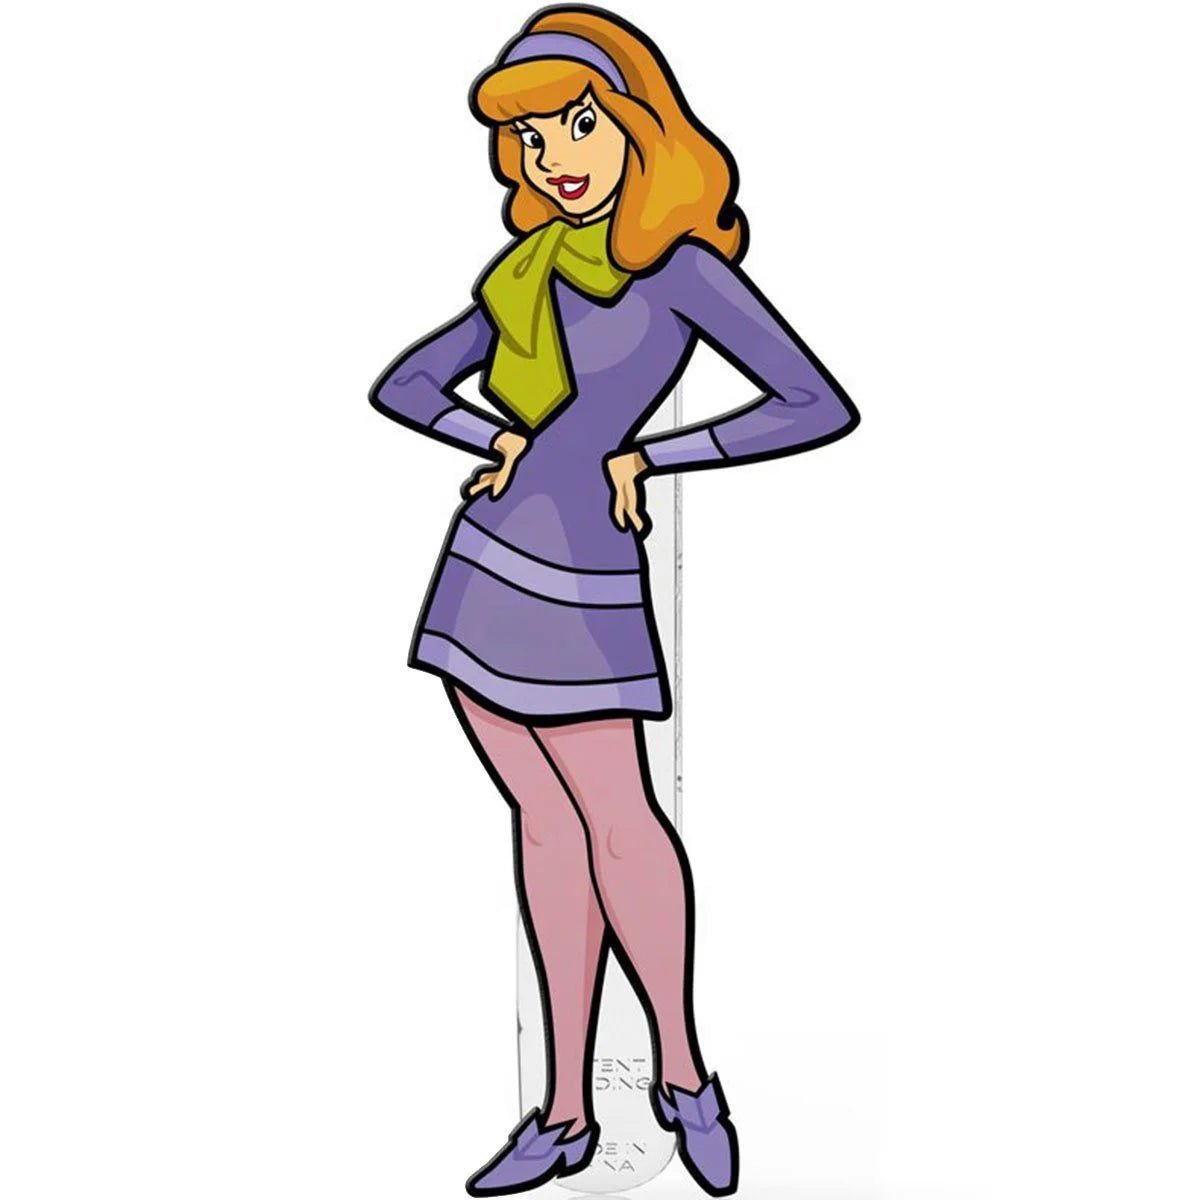 Scooby-Doo Daphne Blake FiGPiN Classic 3-Inch Enamel Pin #720 - Simon's Collectibles